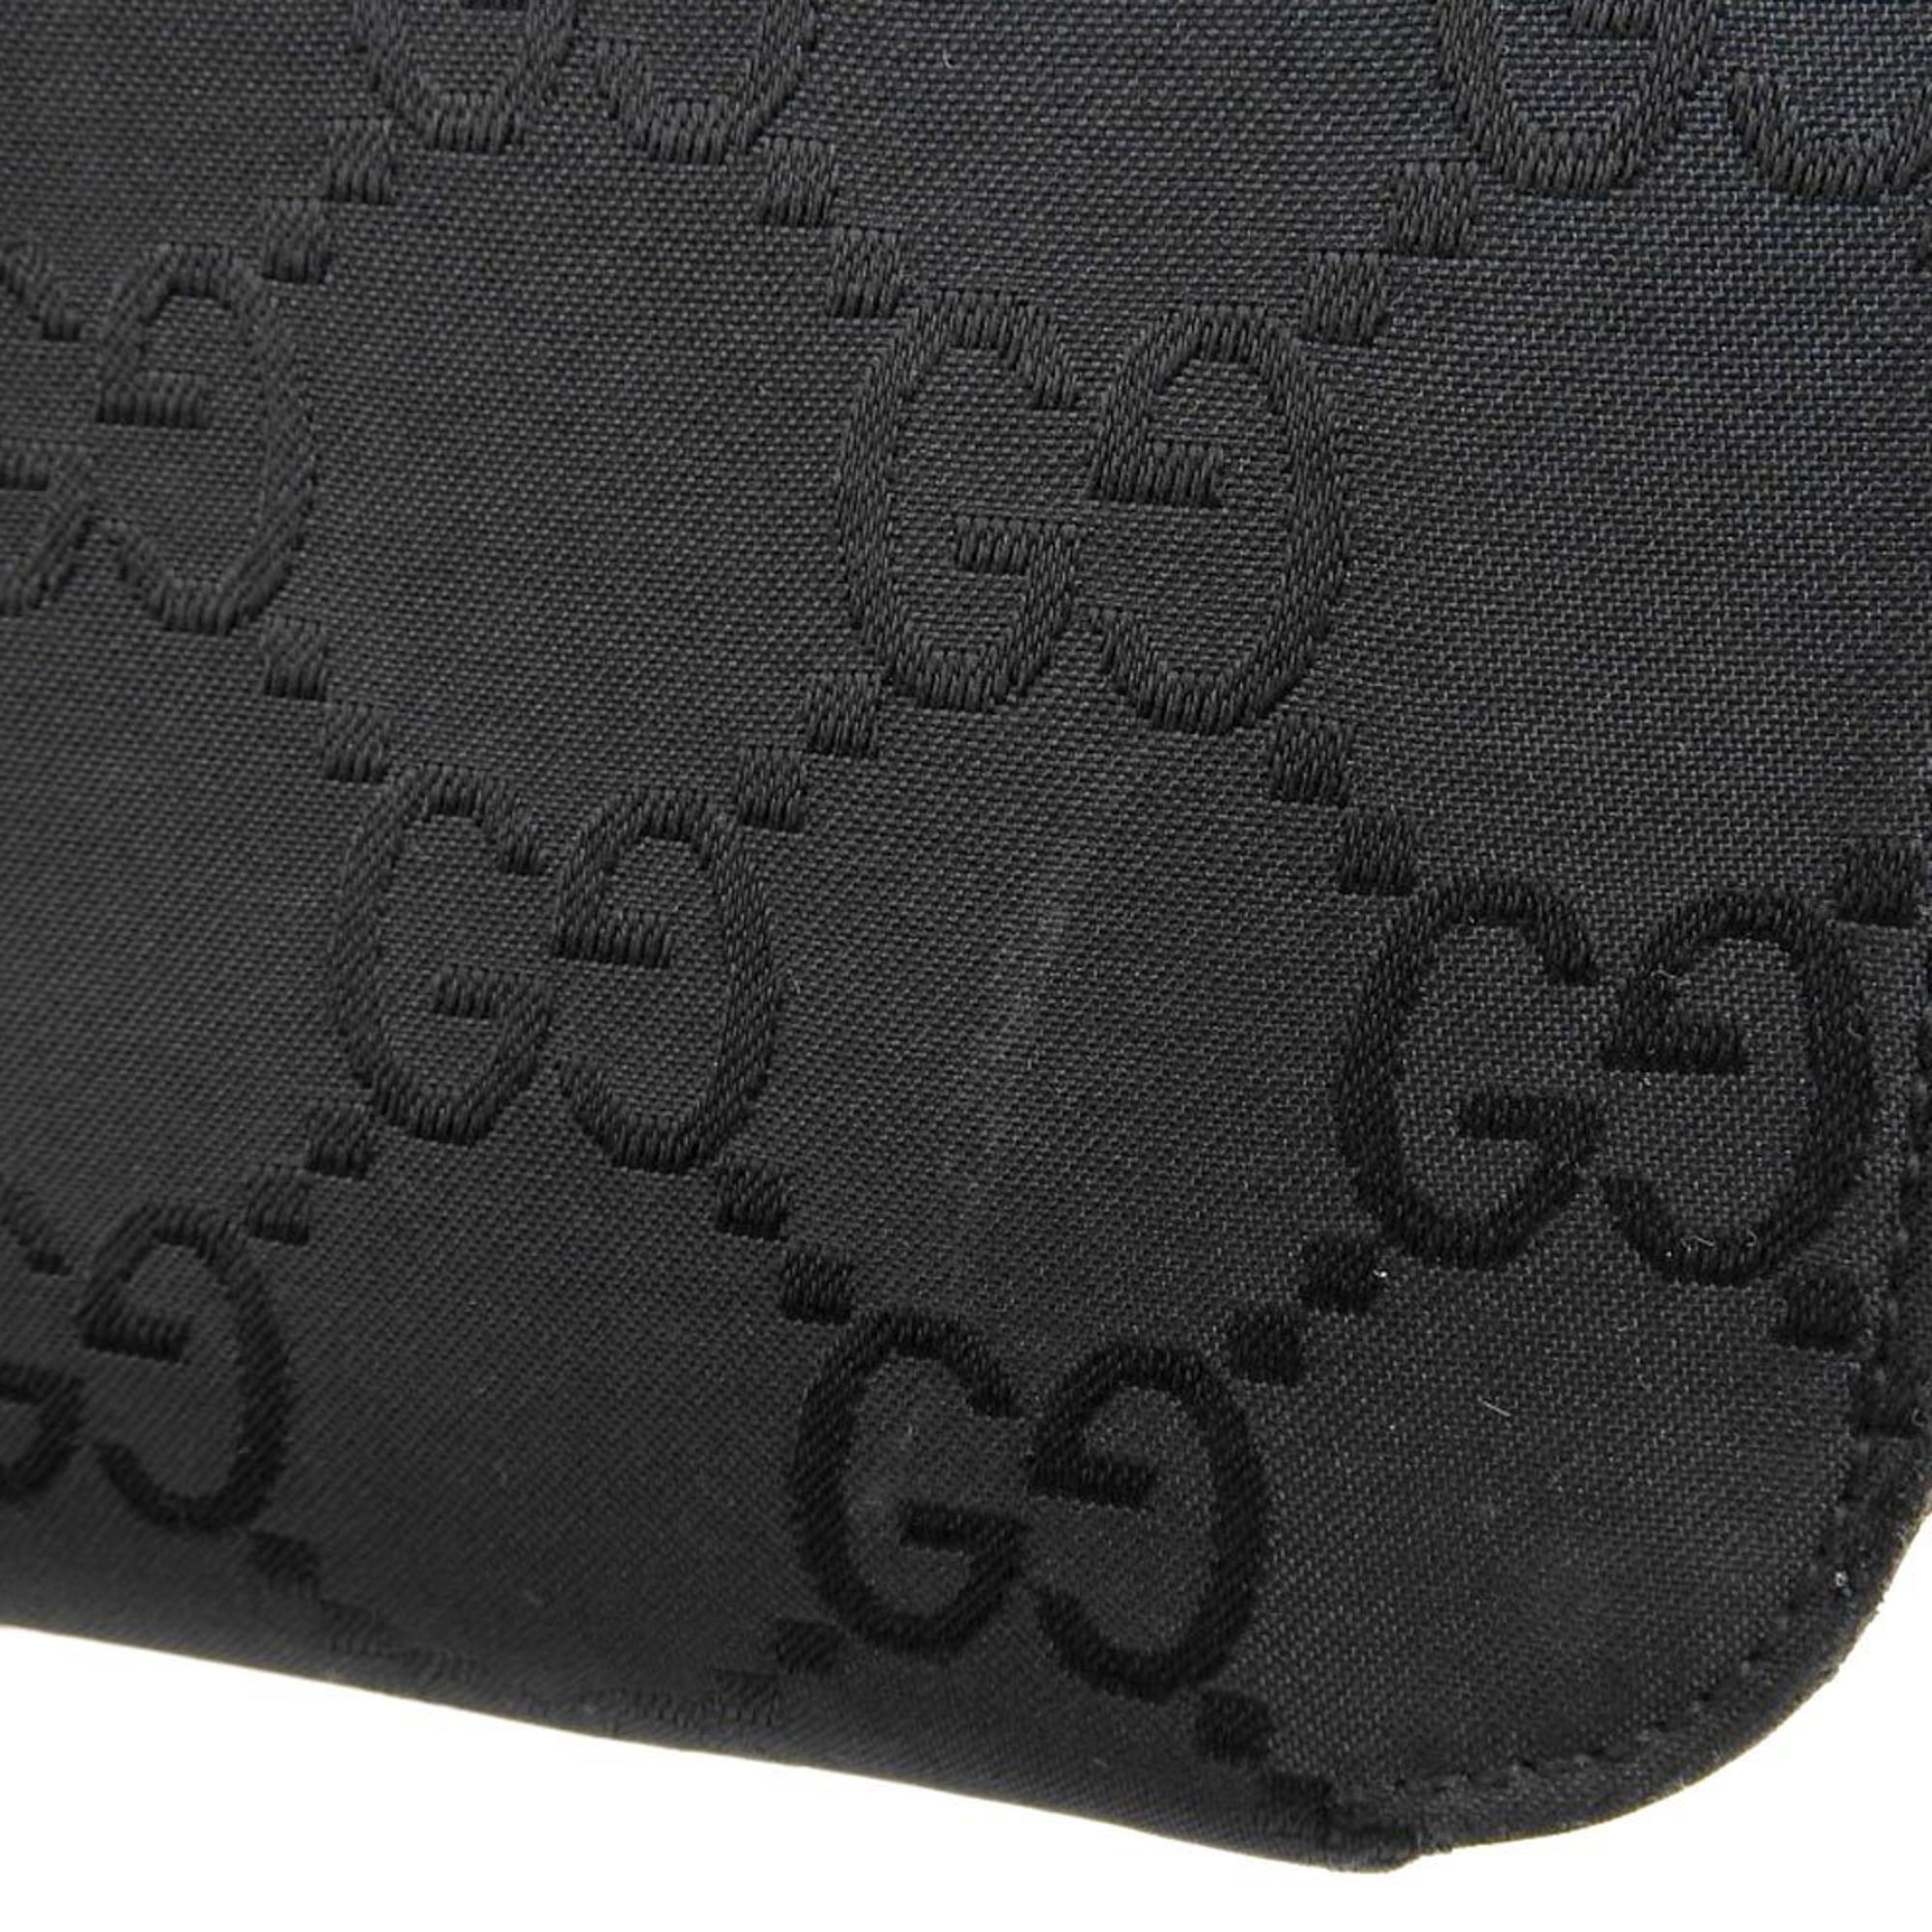 Gucci GUCCI GG canvas shoulder bag black silver hardware 001 3293